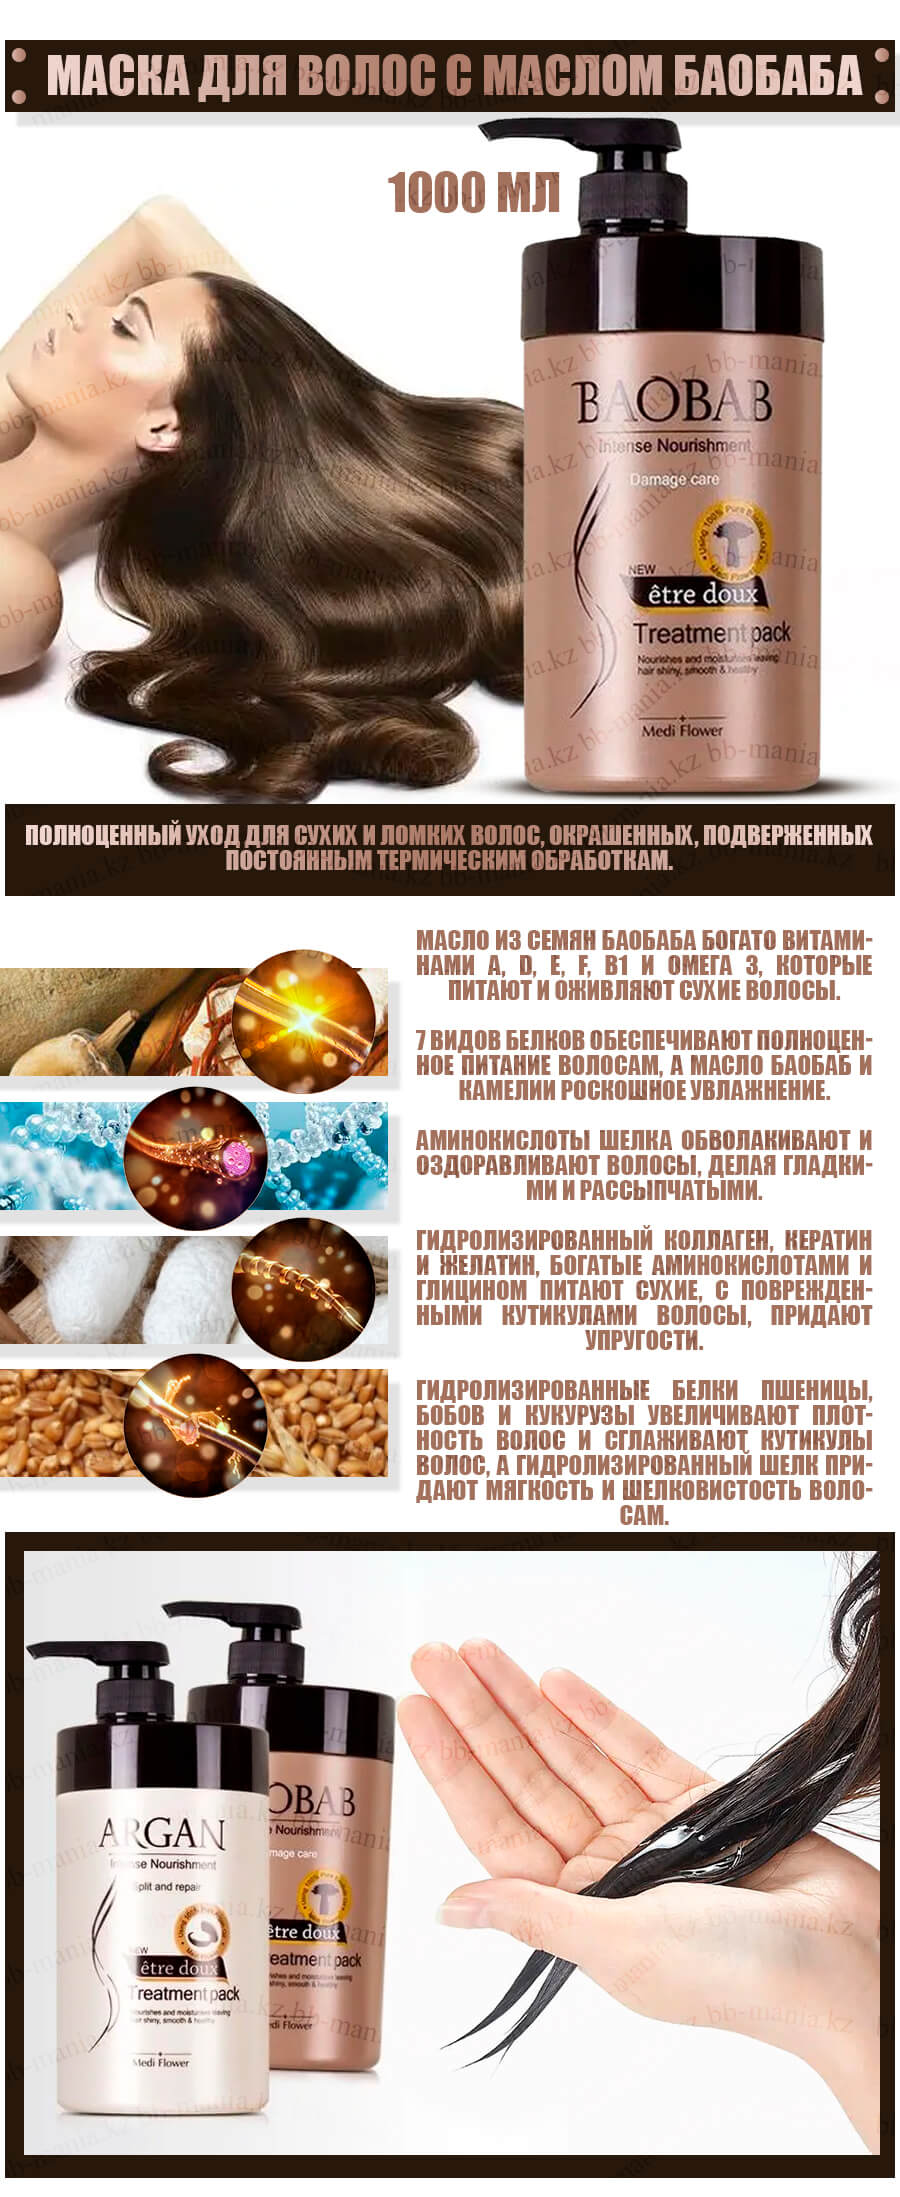 Etre doux Baobab Treatment Hair Pack [Medi Flower] (1)